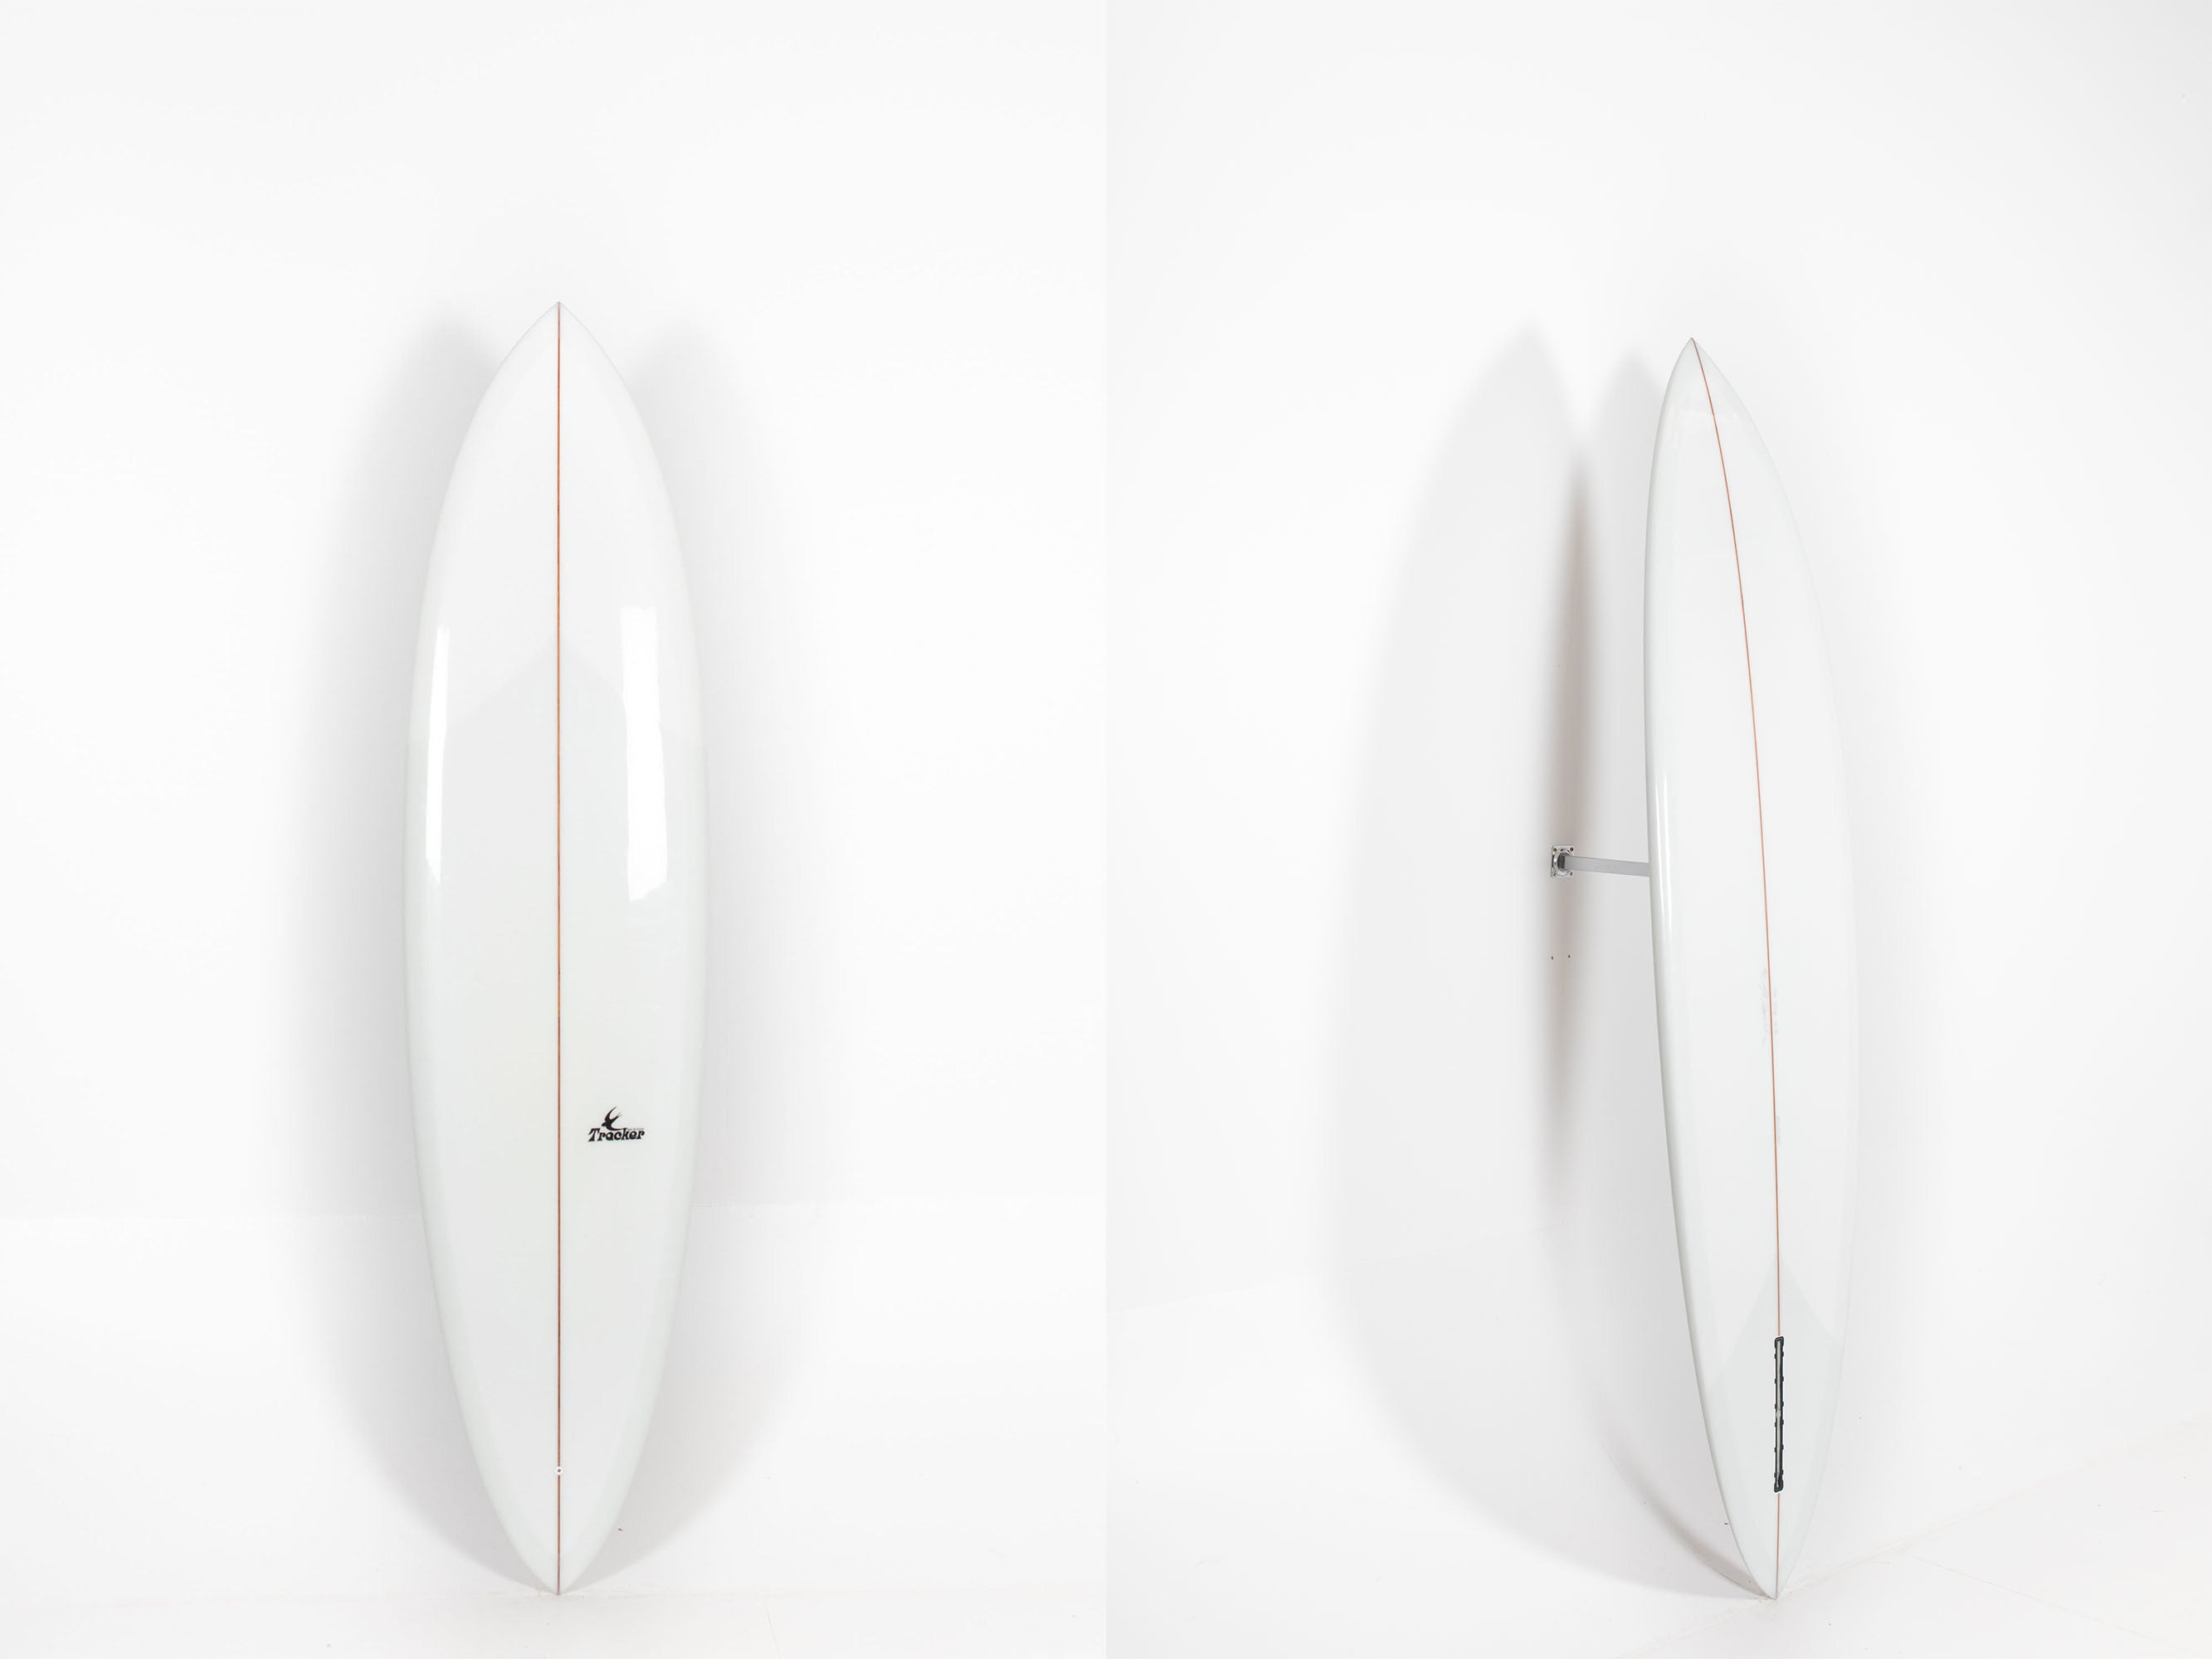 Pukas Surf Shop - Tracker by McTavis Surfboards